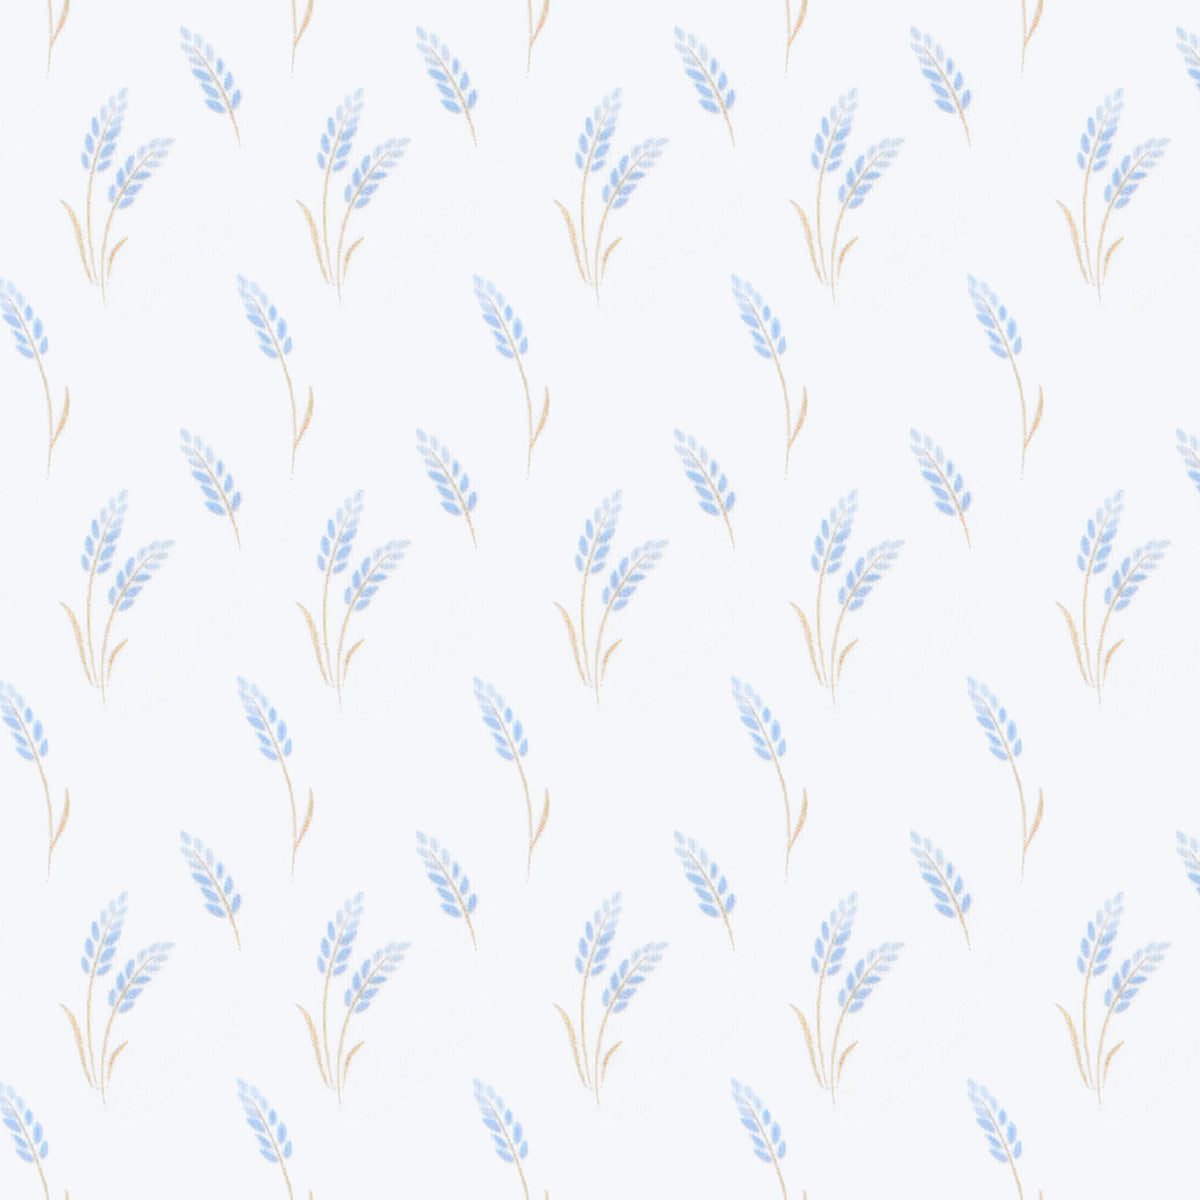 Wheat Spikes Printed Zipper Footie  |  Baby Unisex